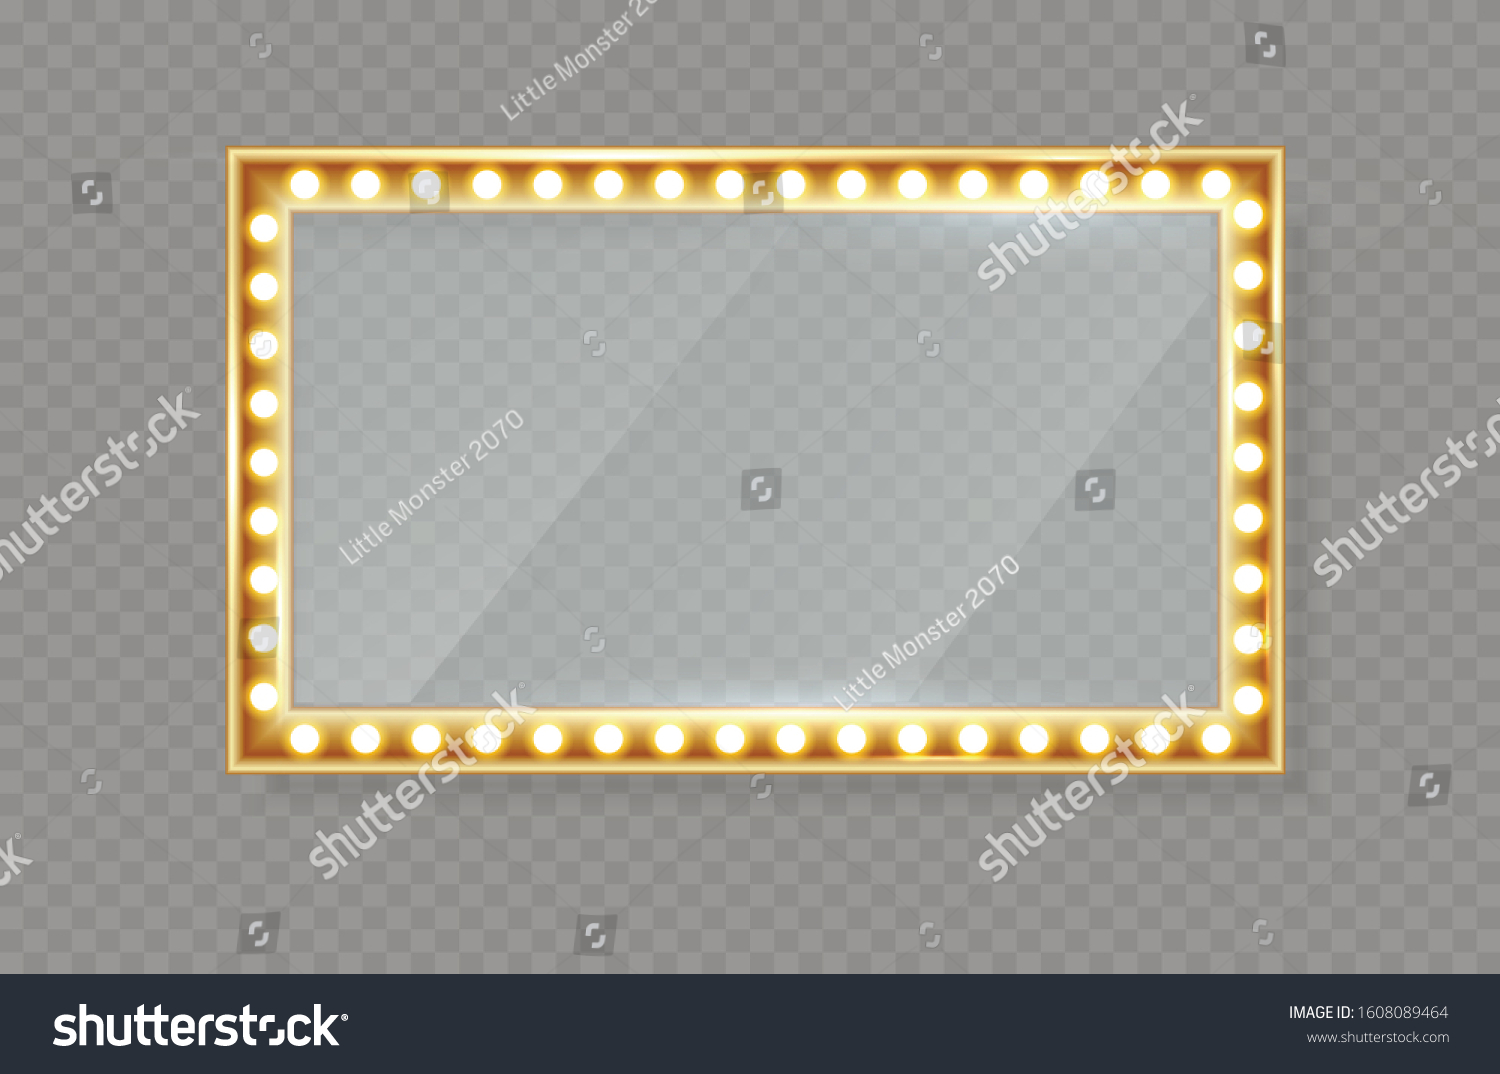 SVG of Mirror in frame with gold lights with light makeup lights in changing room or backroom. Vector illustration, EPS 10. svg